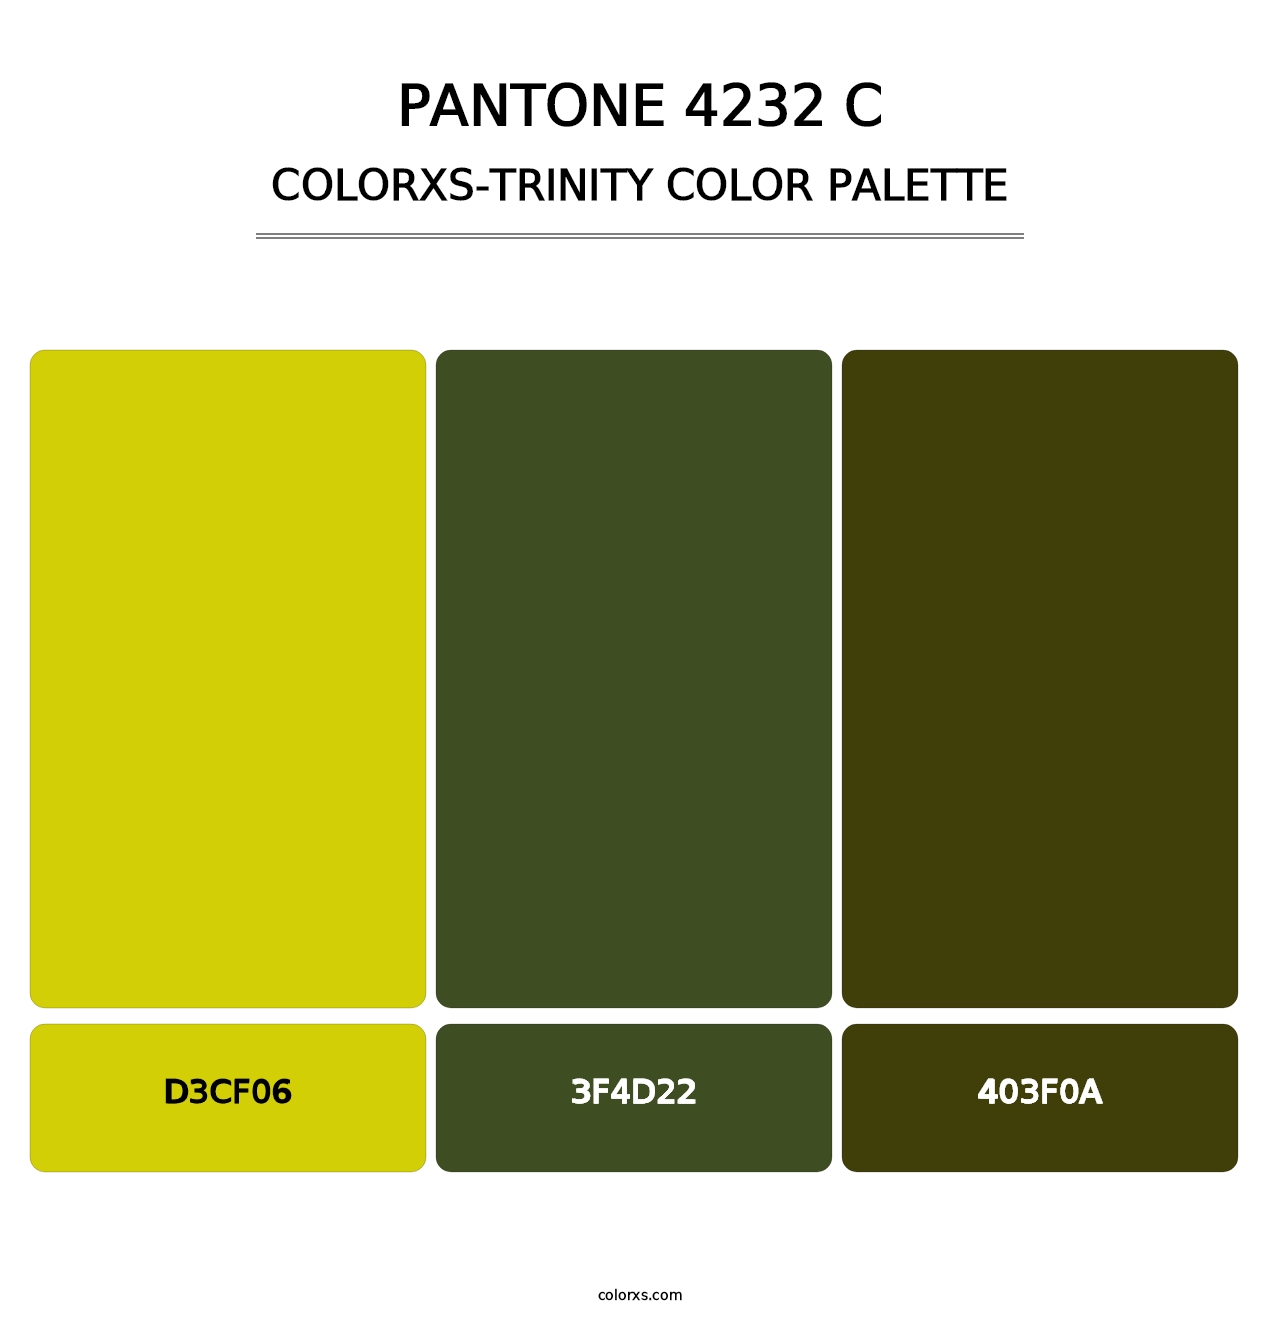 PANTONE 4232 C - Colorxs Trinity Palette